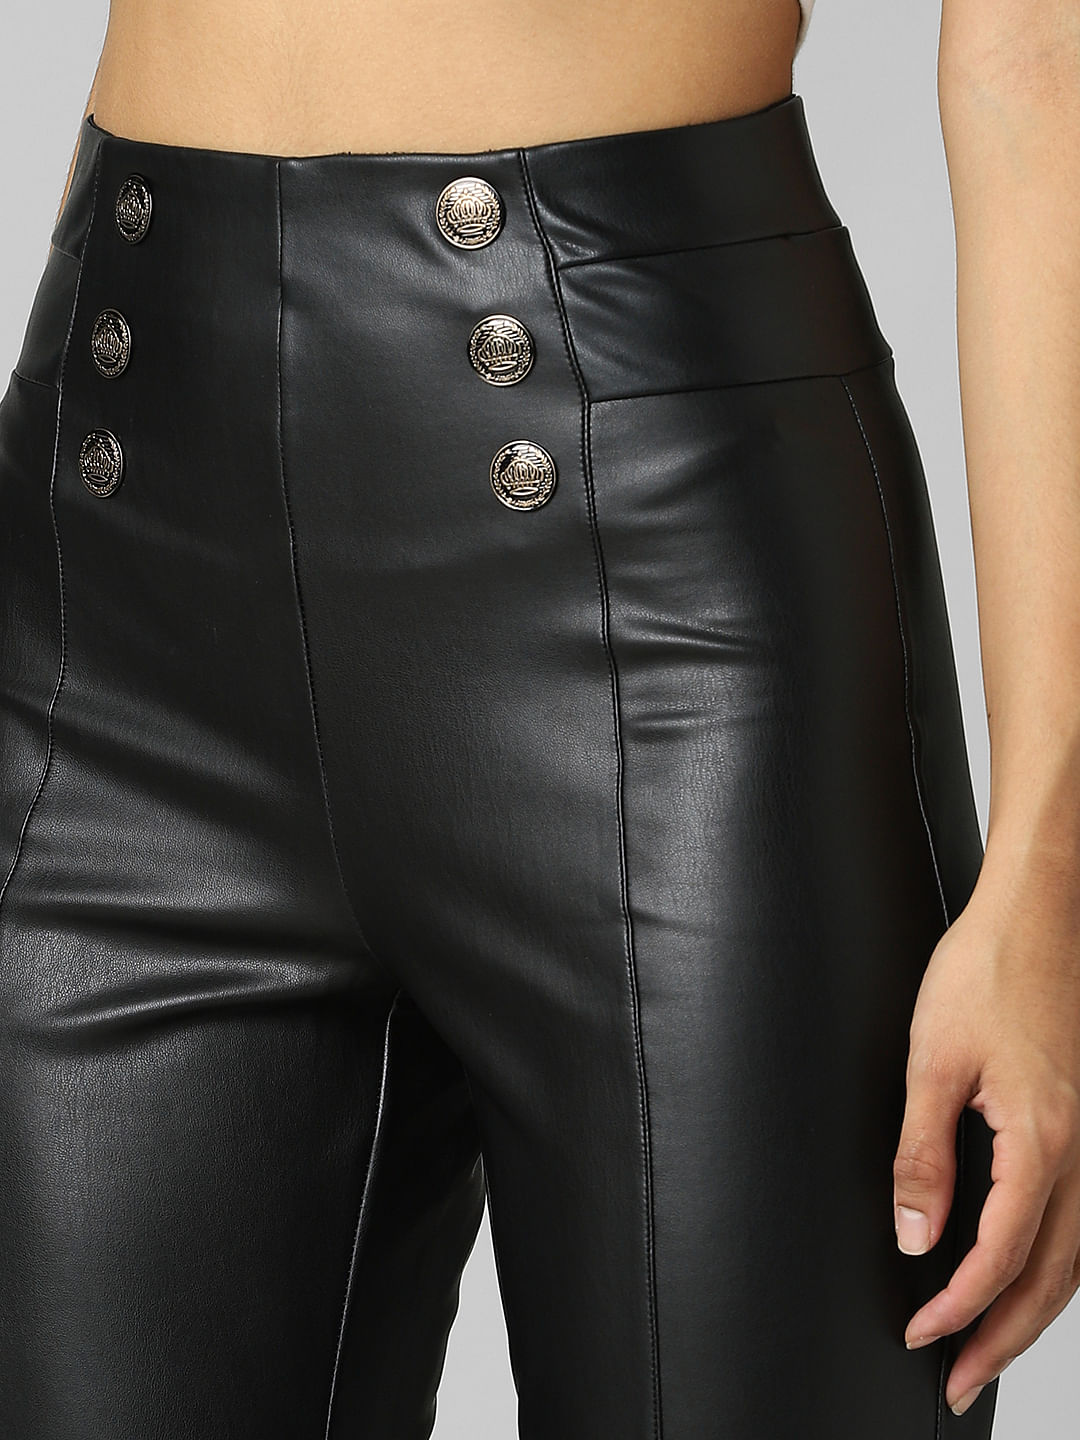 Buy APSAMBRFaux Leather Leggings Women Stretchy Waisted Leather PantsWaist  Size 24 INCH Black at Amazonin